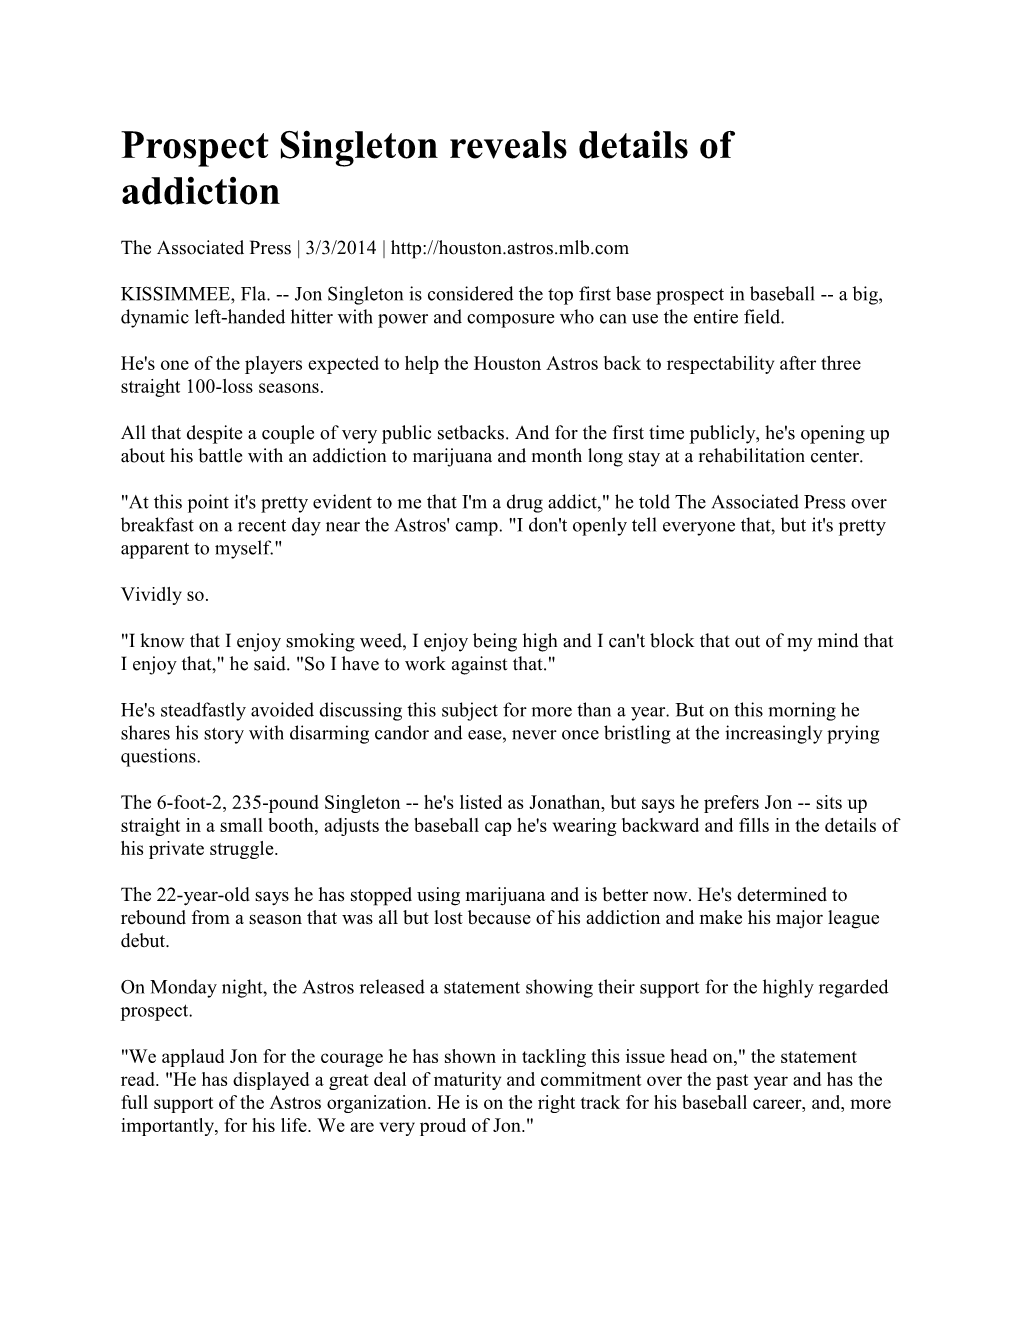 Prospect Singleton Reveals Details of Addiction